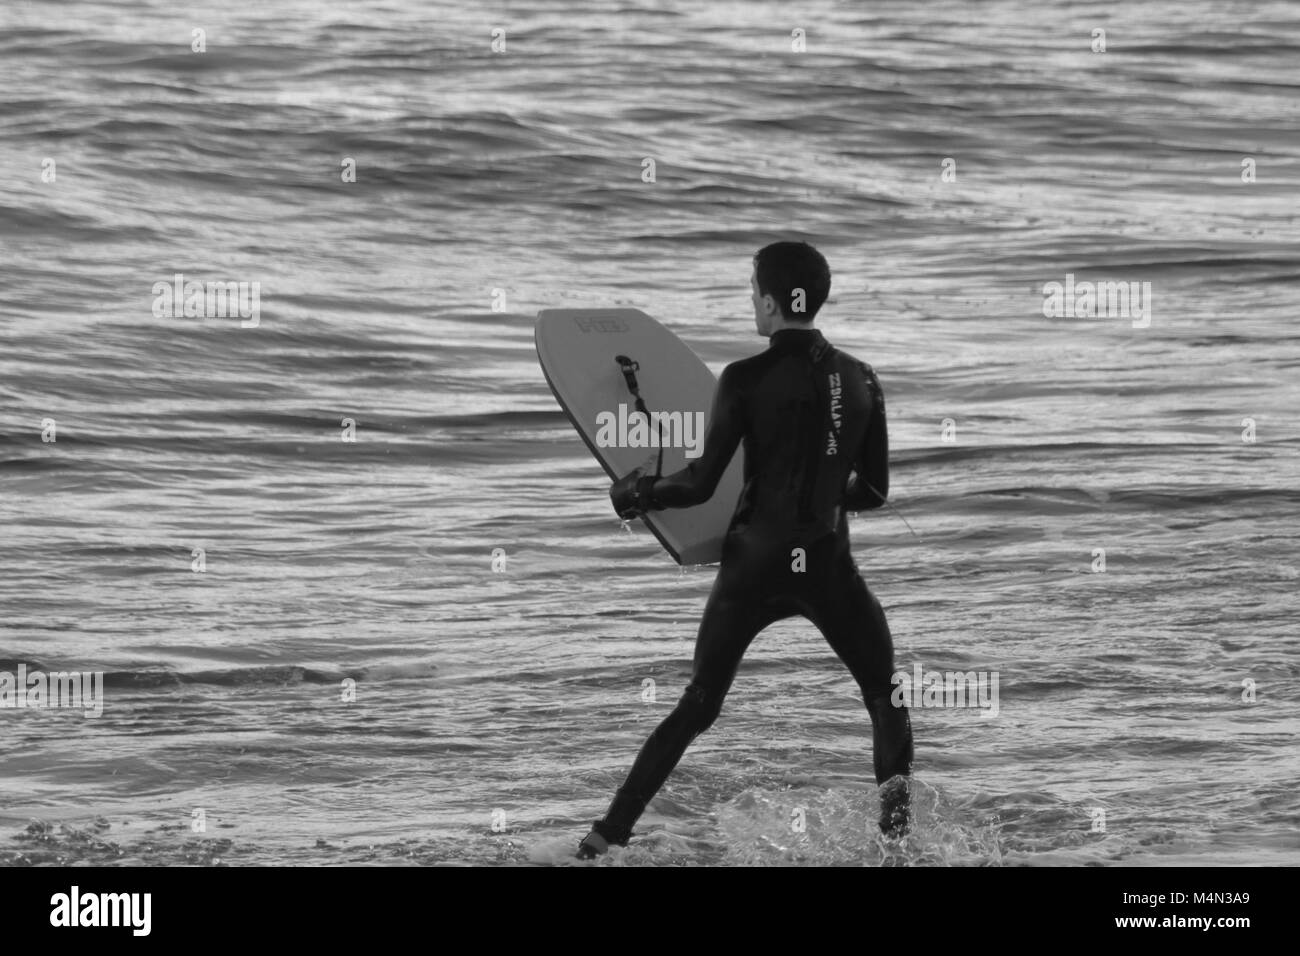 Male Bodyboarder Surfing the North Sea Waves at Aberdeen Beach, Scotland, UK. Winter 2018. Stock Photo